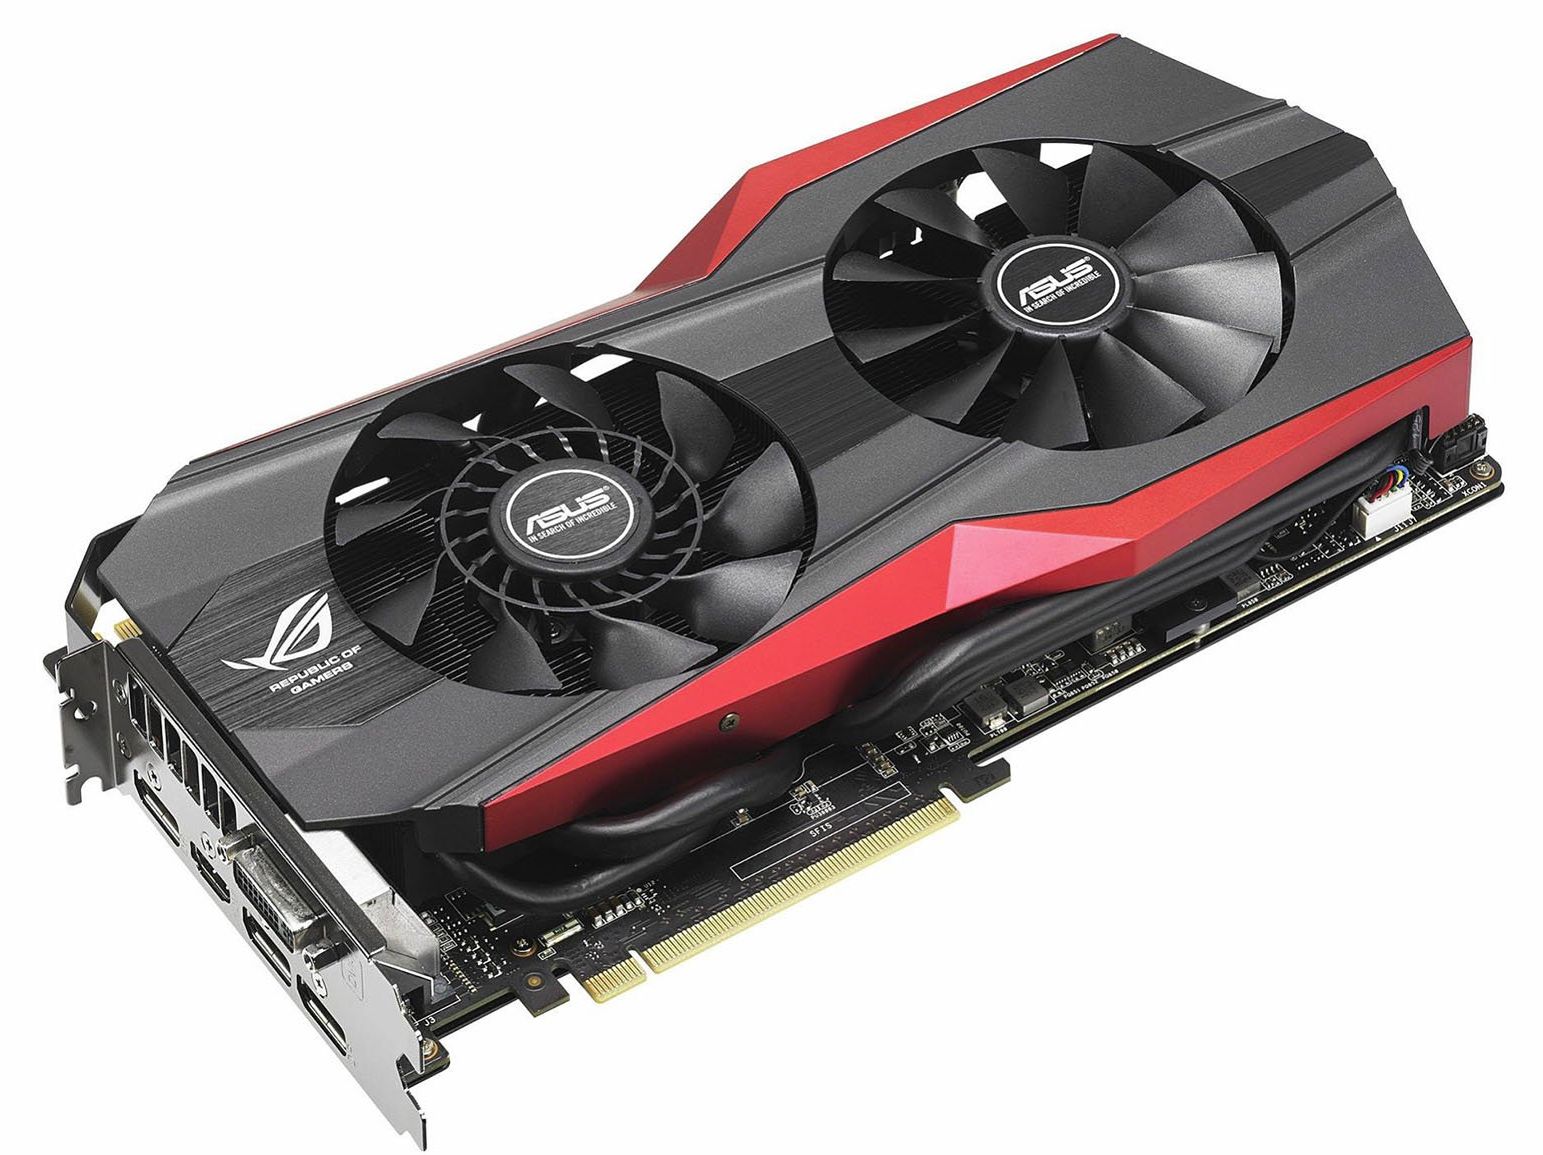 ASUS introduces GeForce GTX 980 ROG 